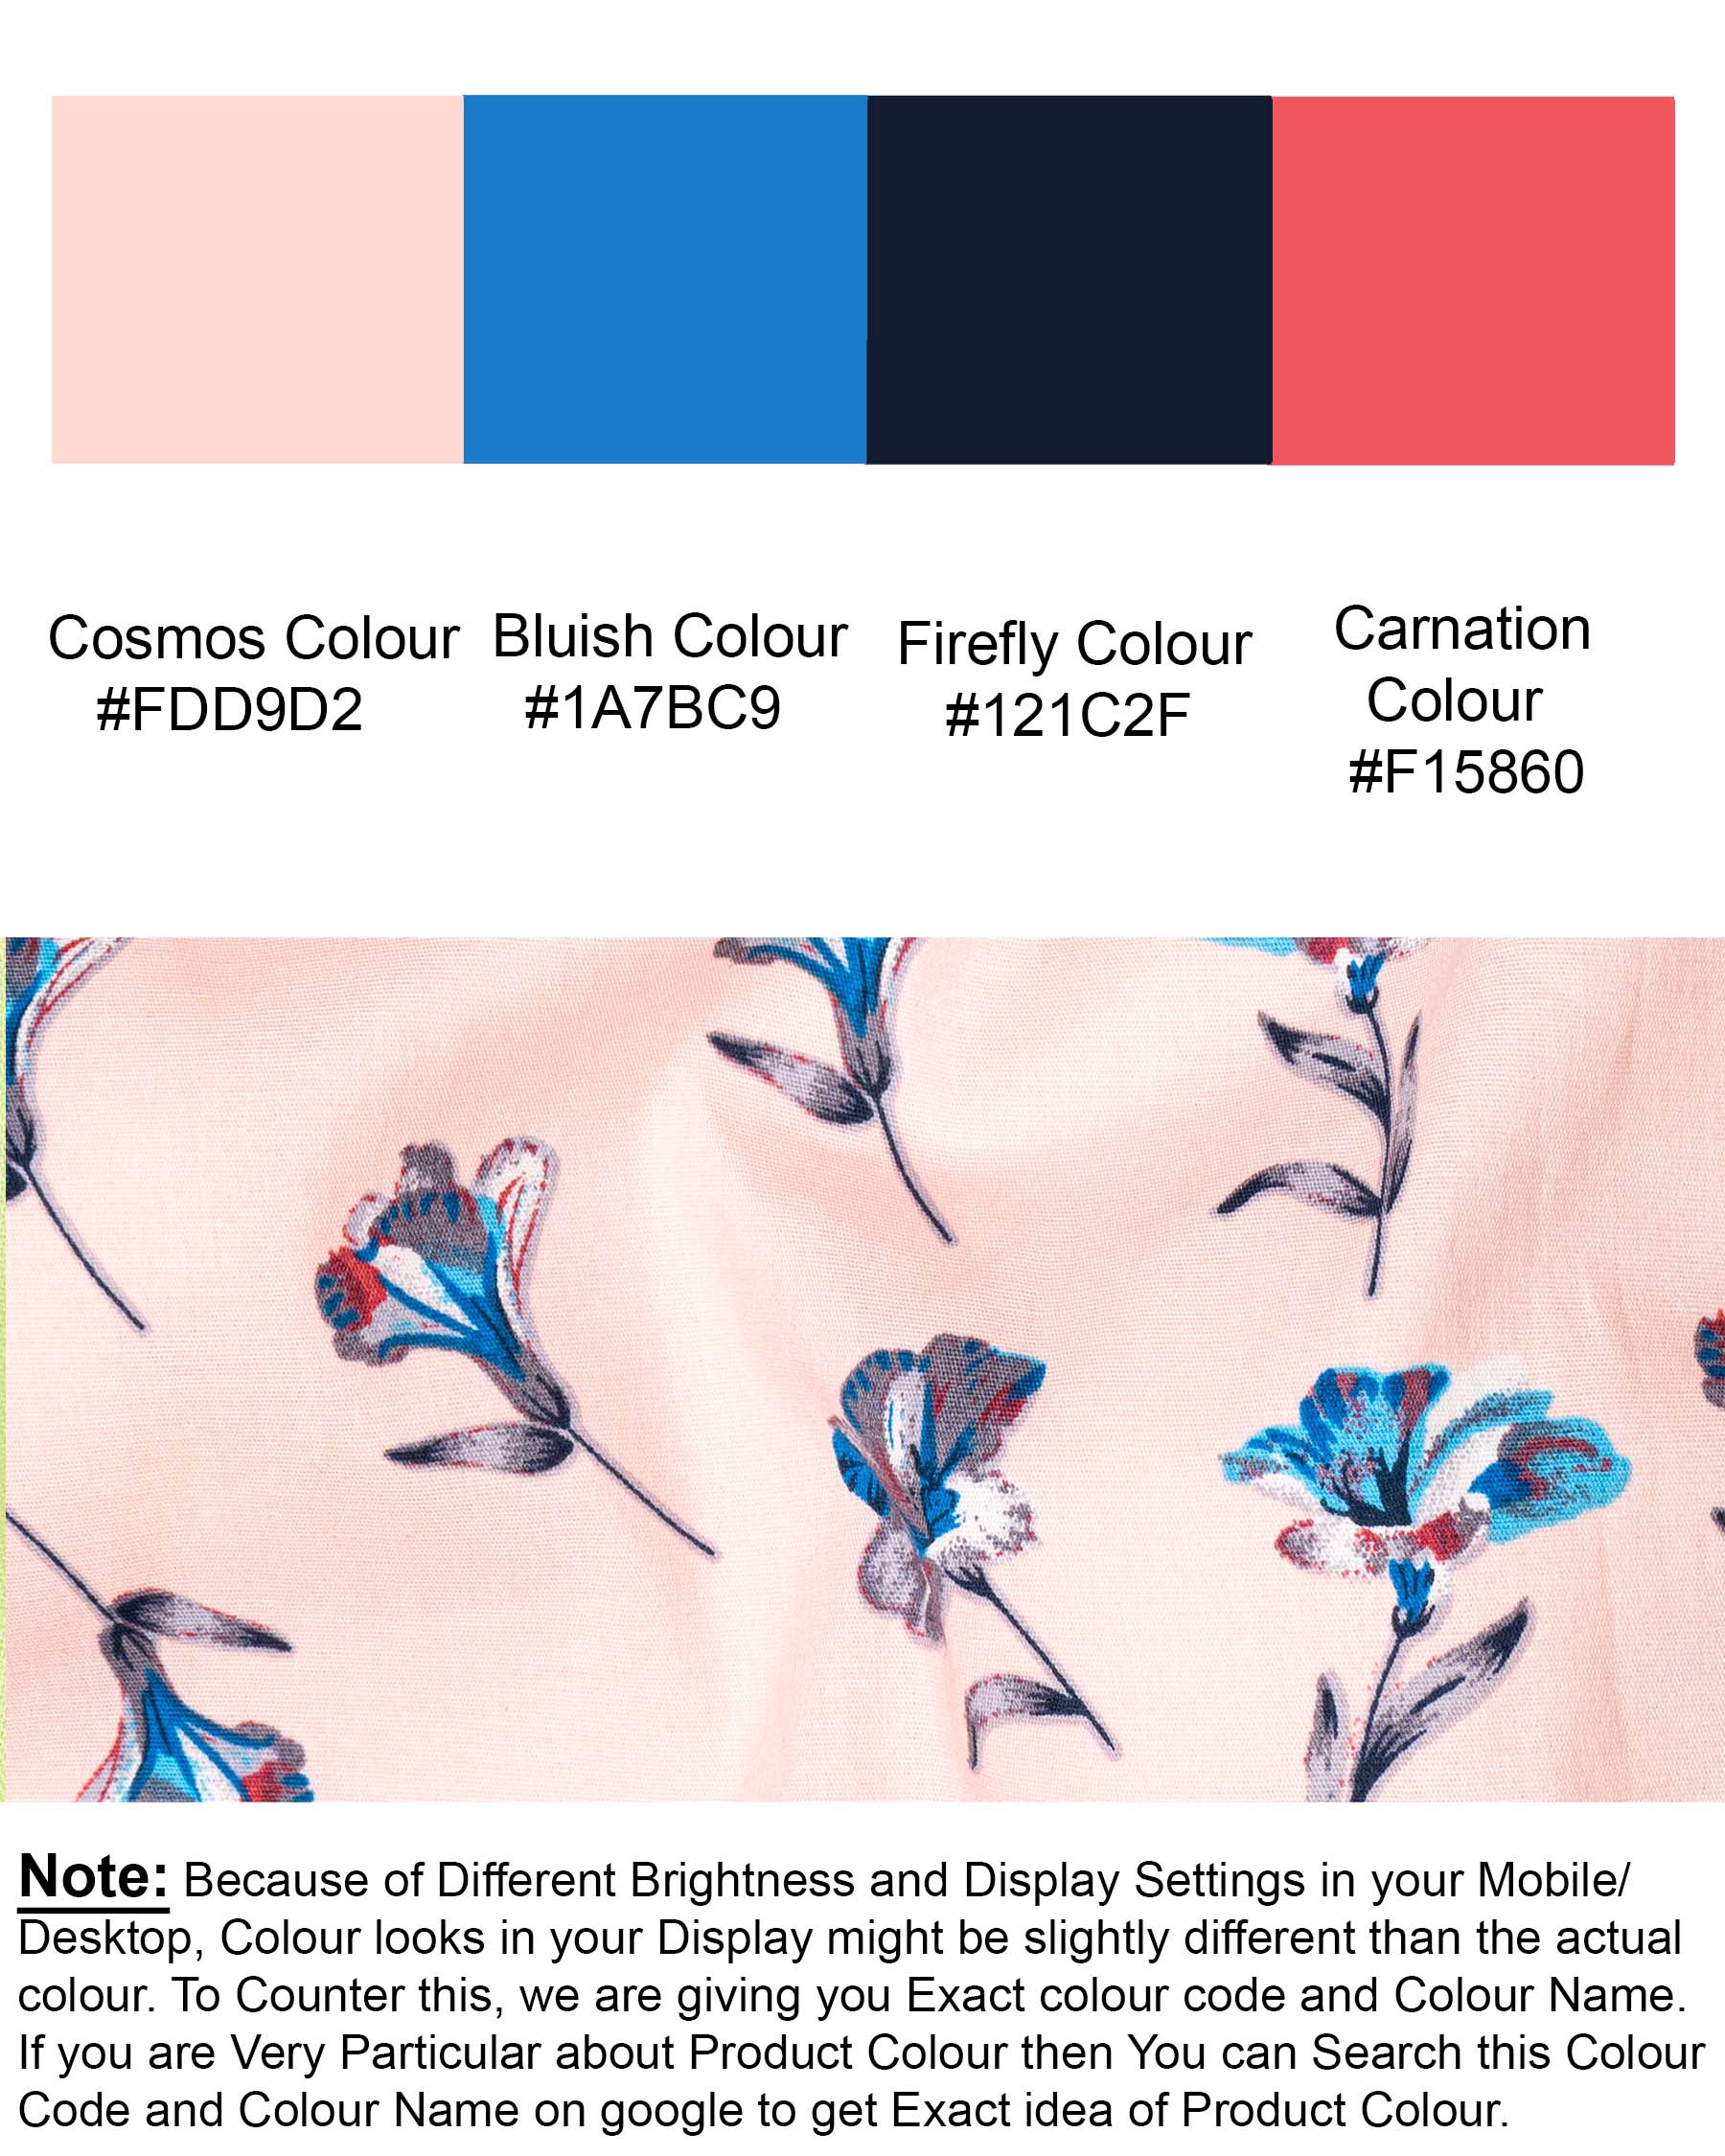 Cosmos Floral Printed Premium Cotton Shirt 6938-BLE-38,6938-BLE-H-38,6938-BLE-39,6938-BLE-H-39,6938-BLE-40,6938-BLE-H-40,6938-BLE-42,6938-BLE-H-42,6938-BLE-44,6938-BLE-H-44,6938-BLE-46,6938-BLE-H-46,6938-BLE-48,6938-BLE-H-48,6938-BLE-50,6938-BLE-H-50,6938-BLE-52,6938-BLE-H-52